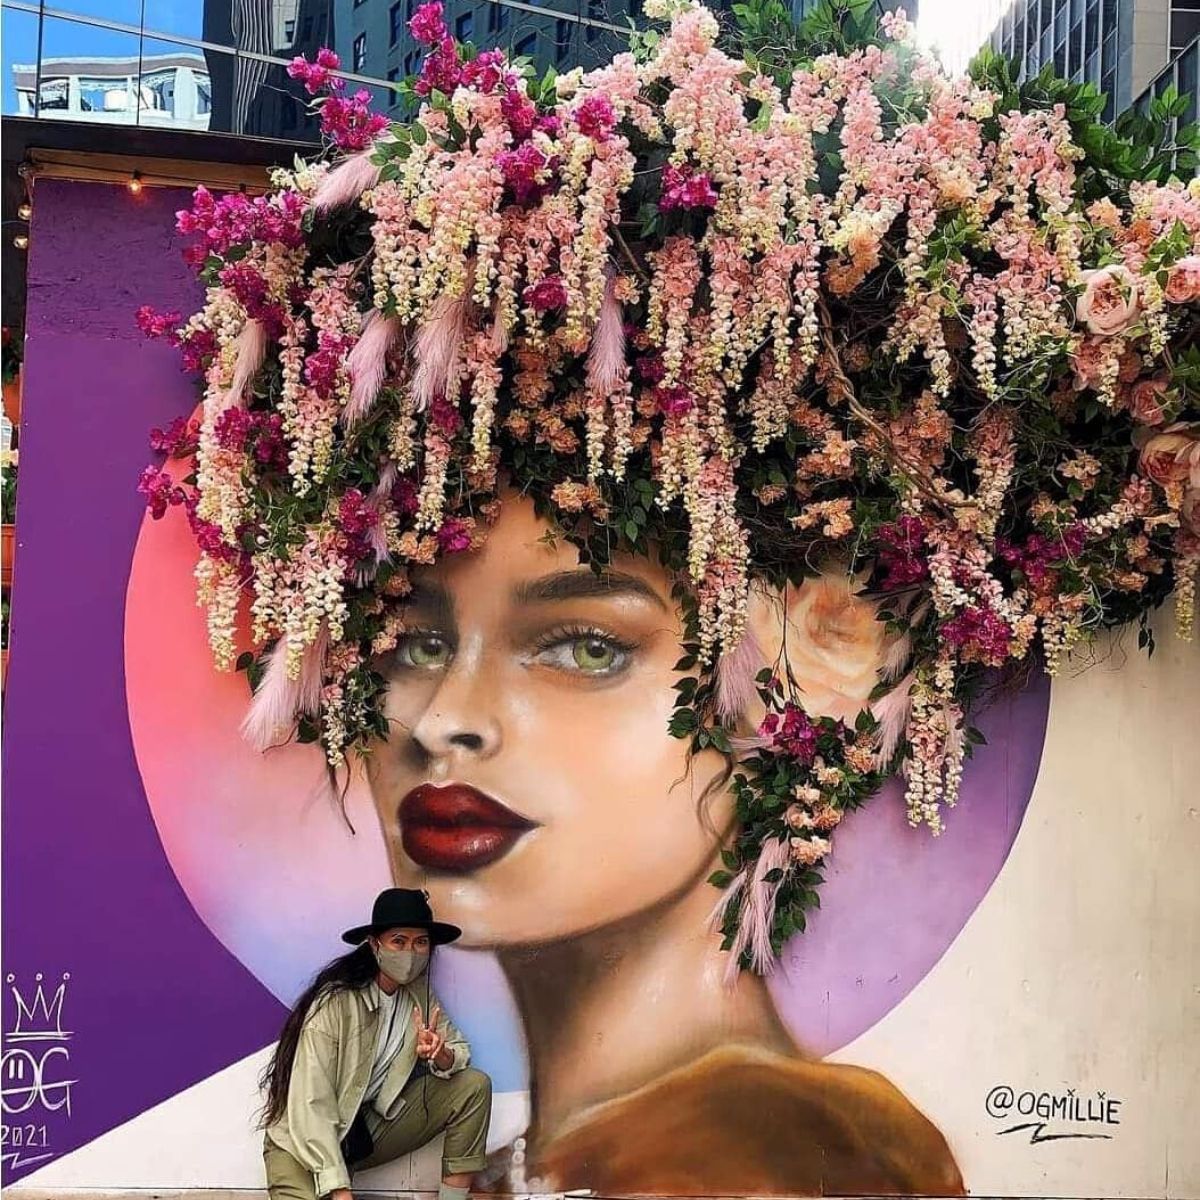 OG Millies street art with beautiful flowers